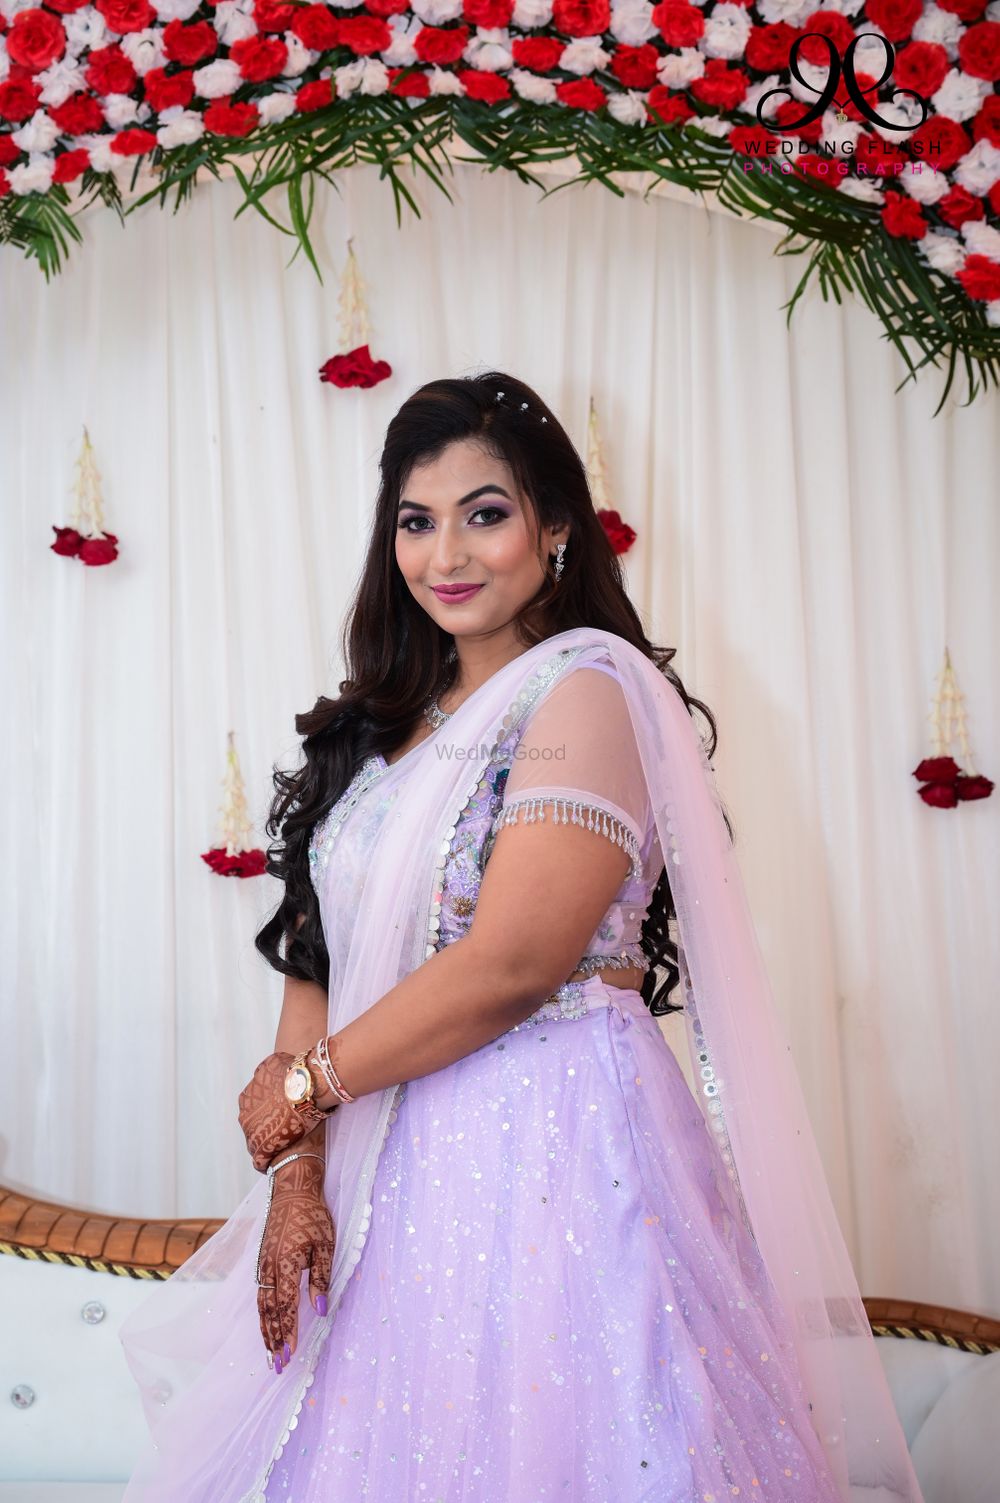 Photo From Monalisha Rajesh - By Wedding Flash